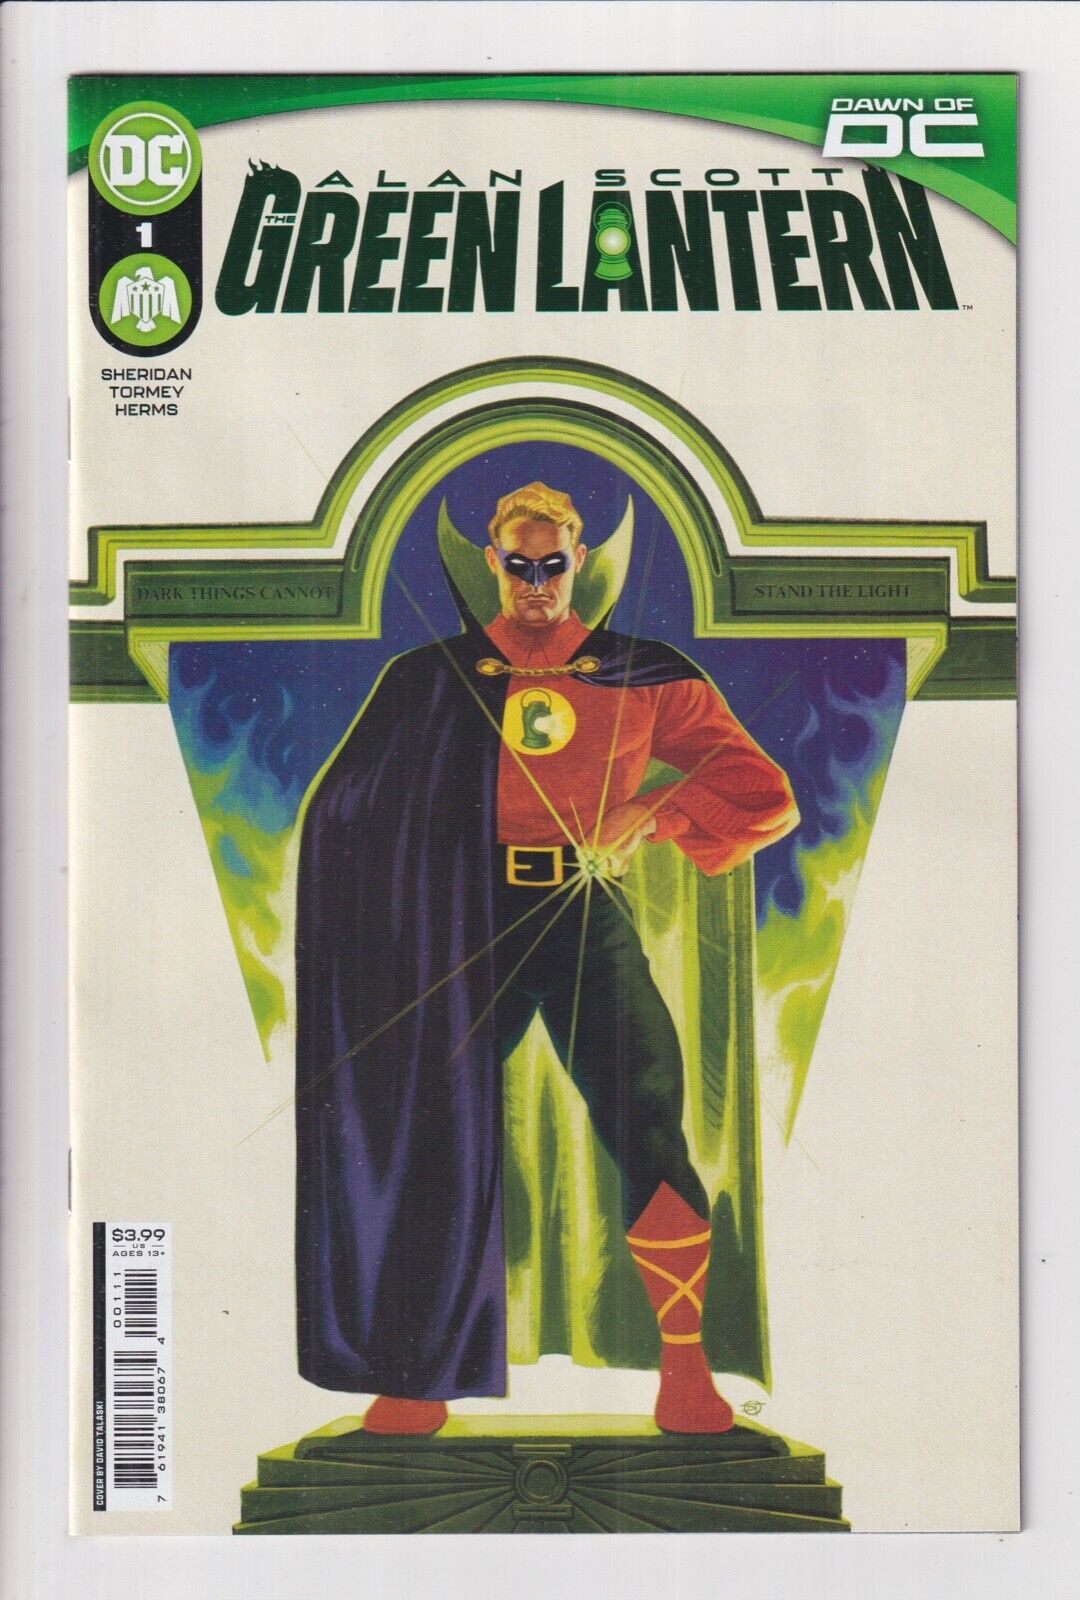 ALAN SCOTT: THE GREEN LANTERN 1 2 3 4 or 5 NM DC comics sold SEPARATELY you PICK